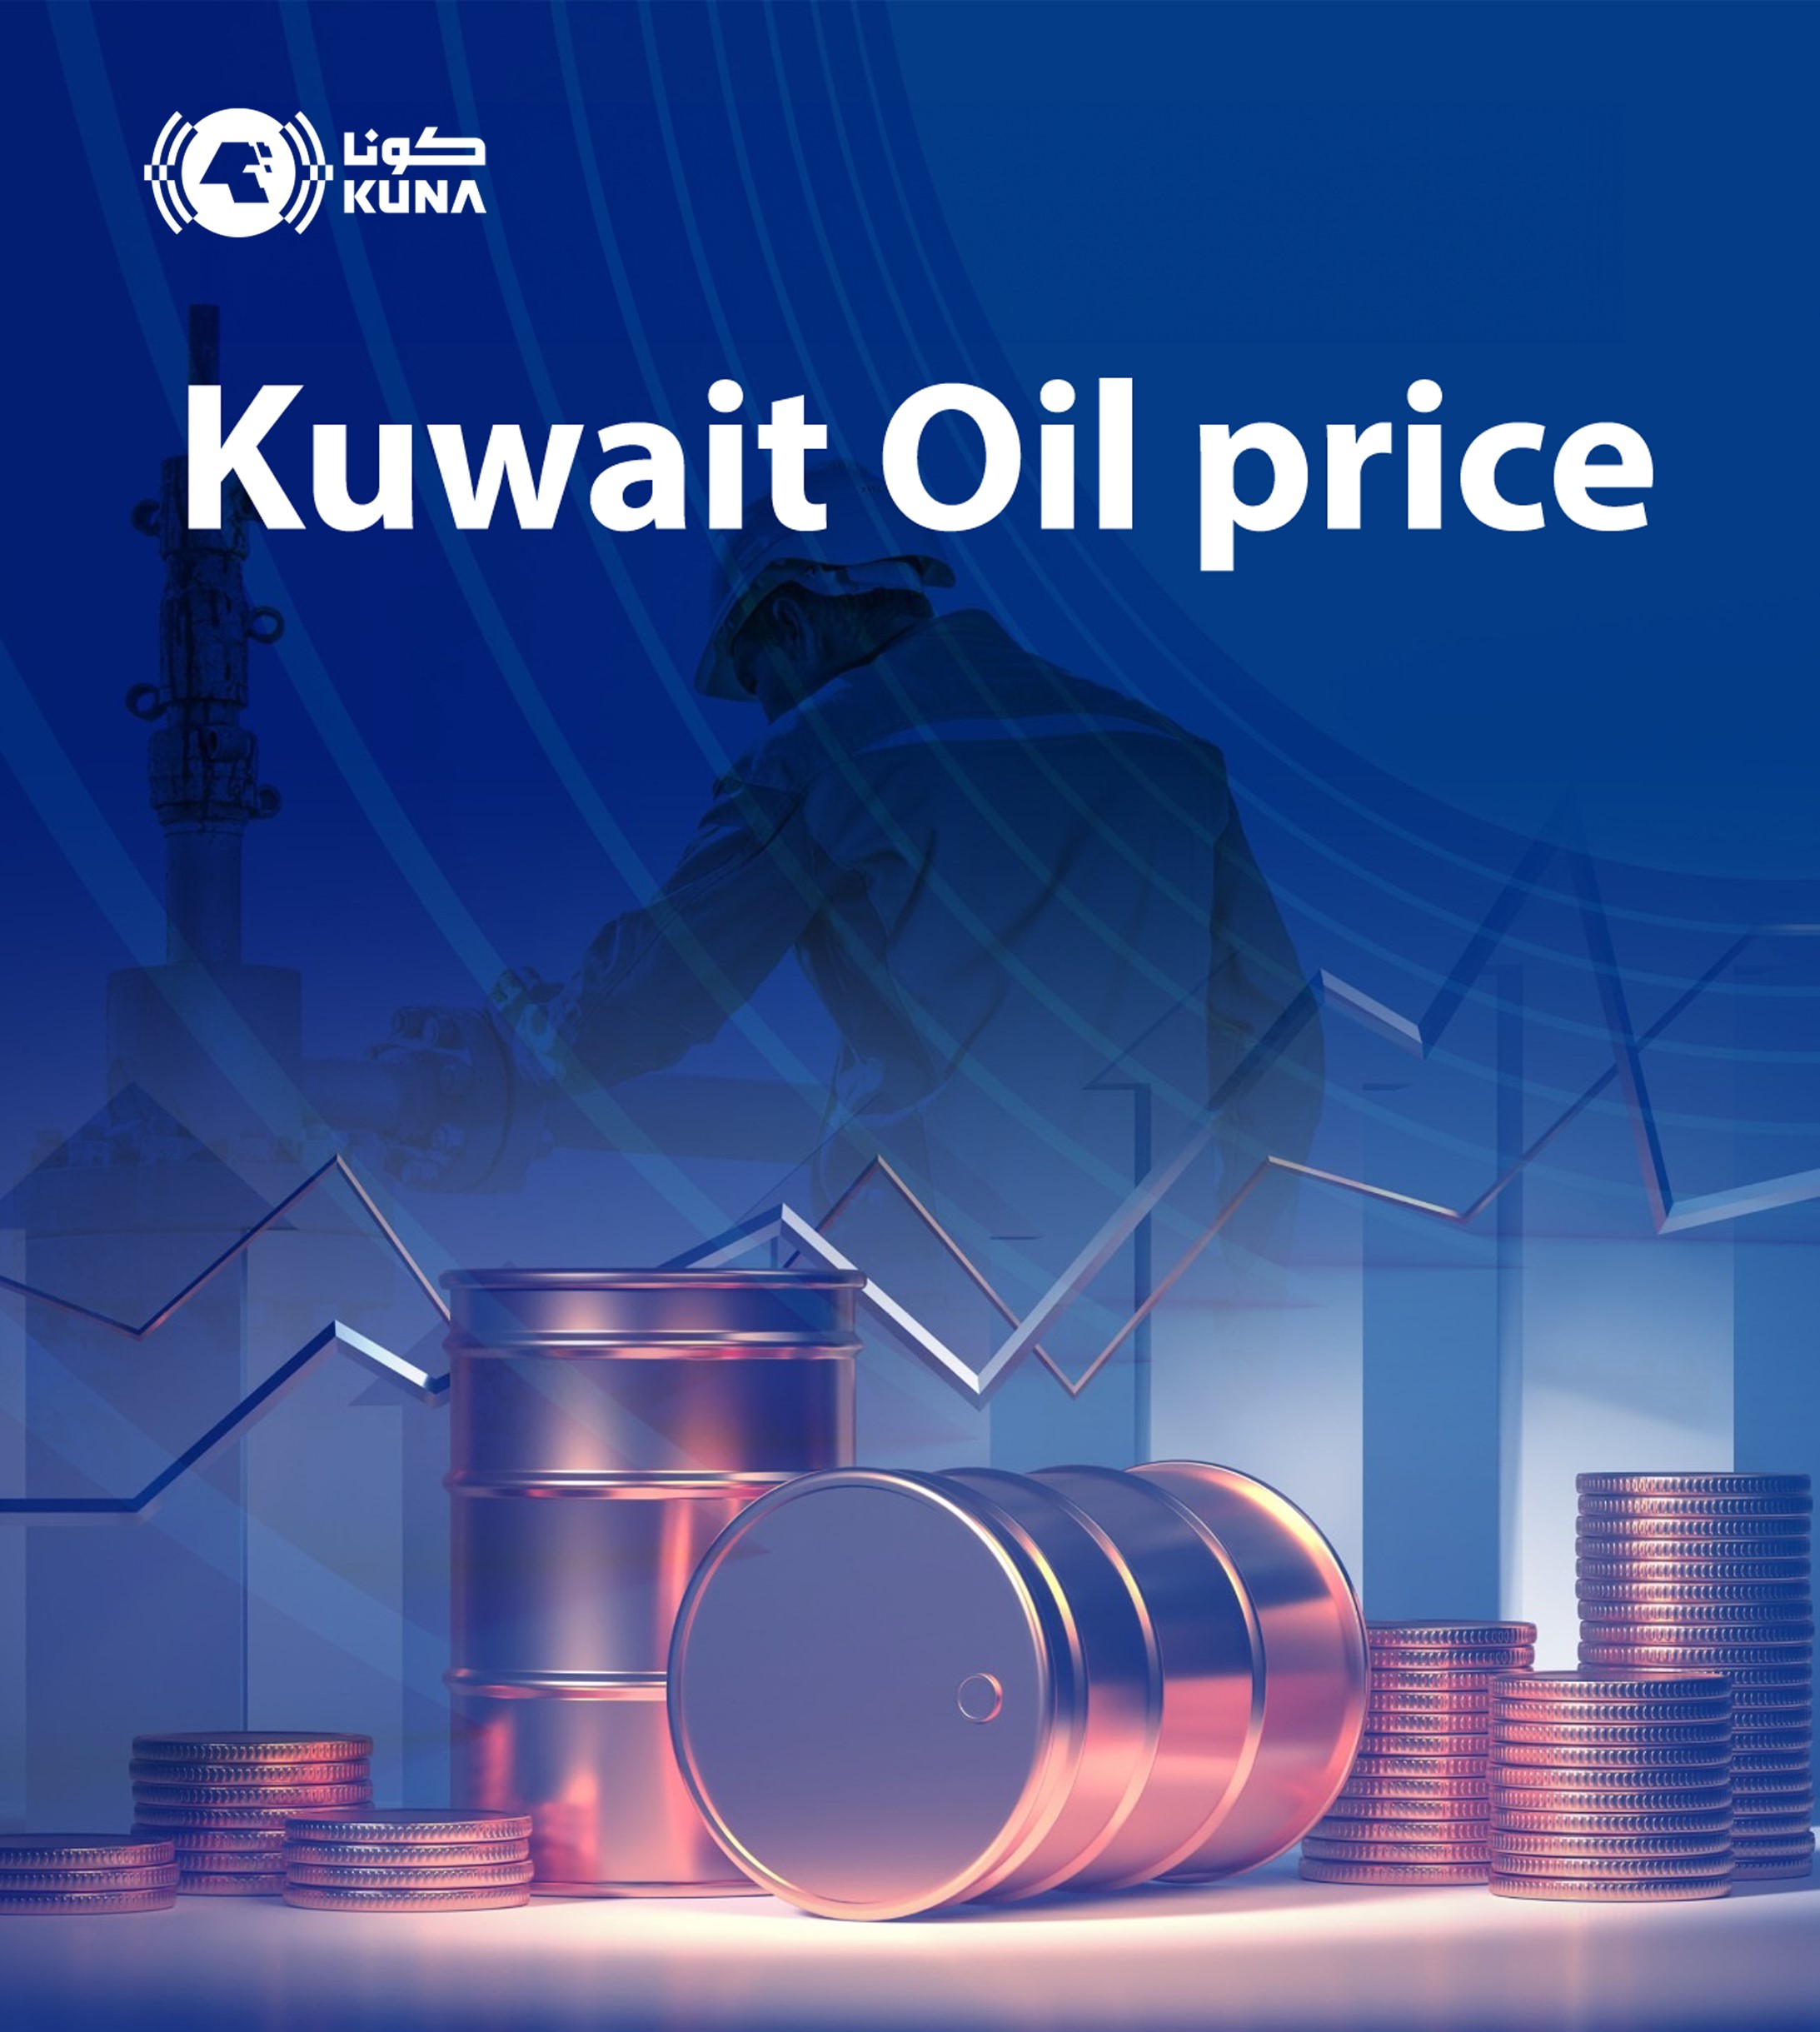 Kuwaiti oil price up to USD 85.57 pb - KPC